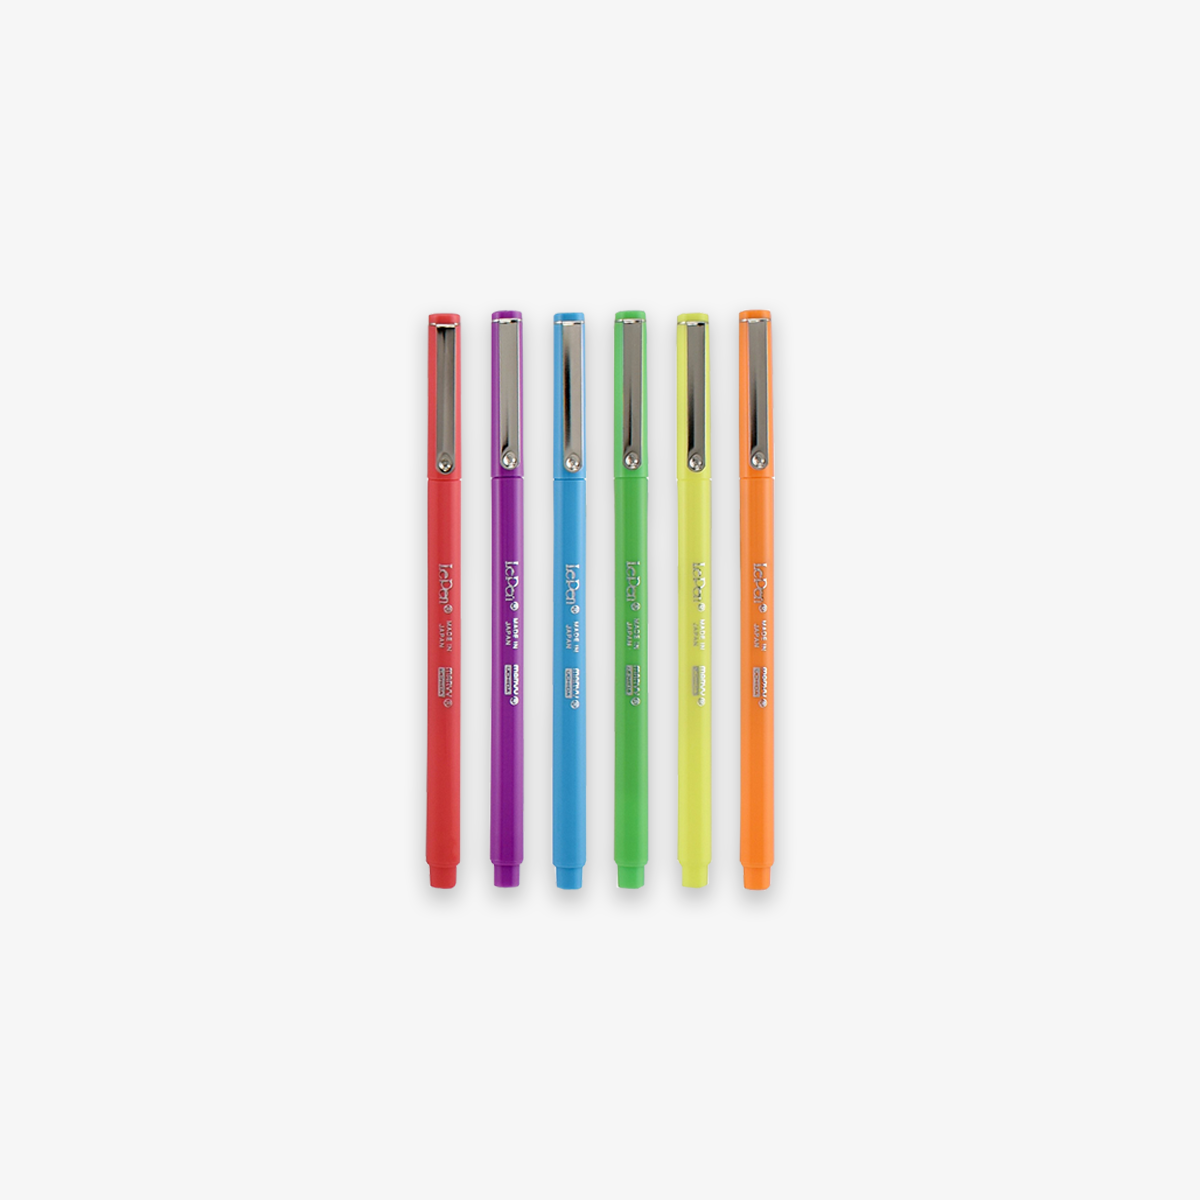 Marvy Uchida Le Pens Multicolor Set | 0.3mm Fine Point Pens | Smudge Proof  Ink | Basic, Neon and Pastel Colors